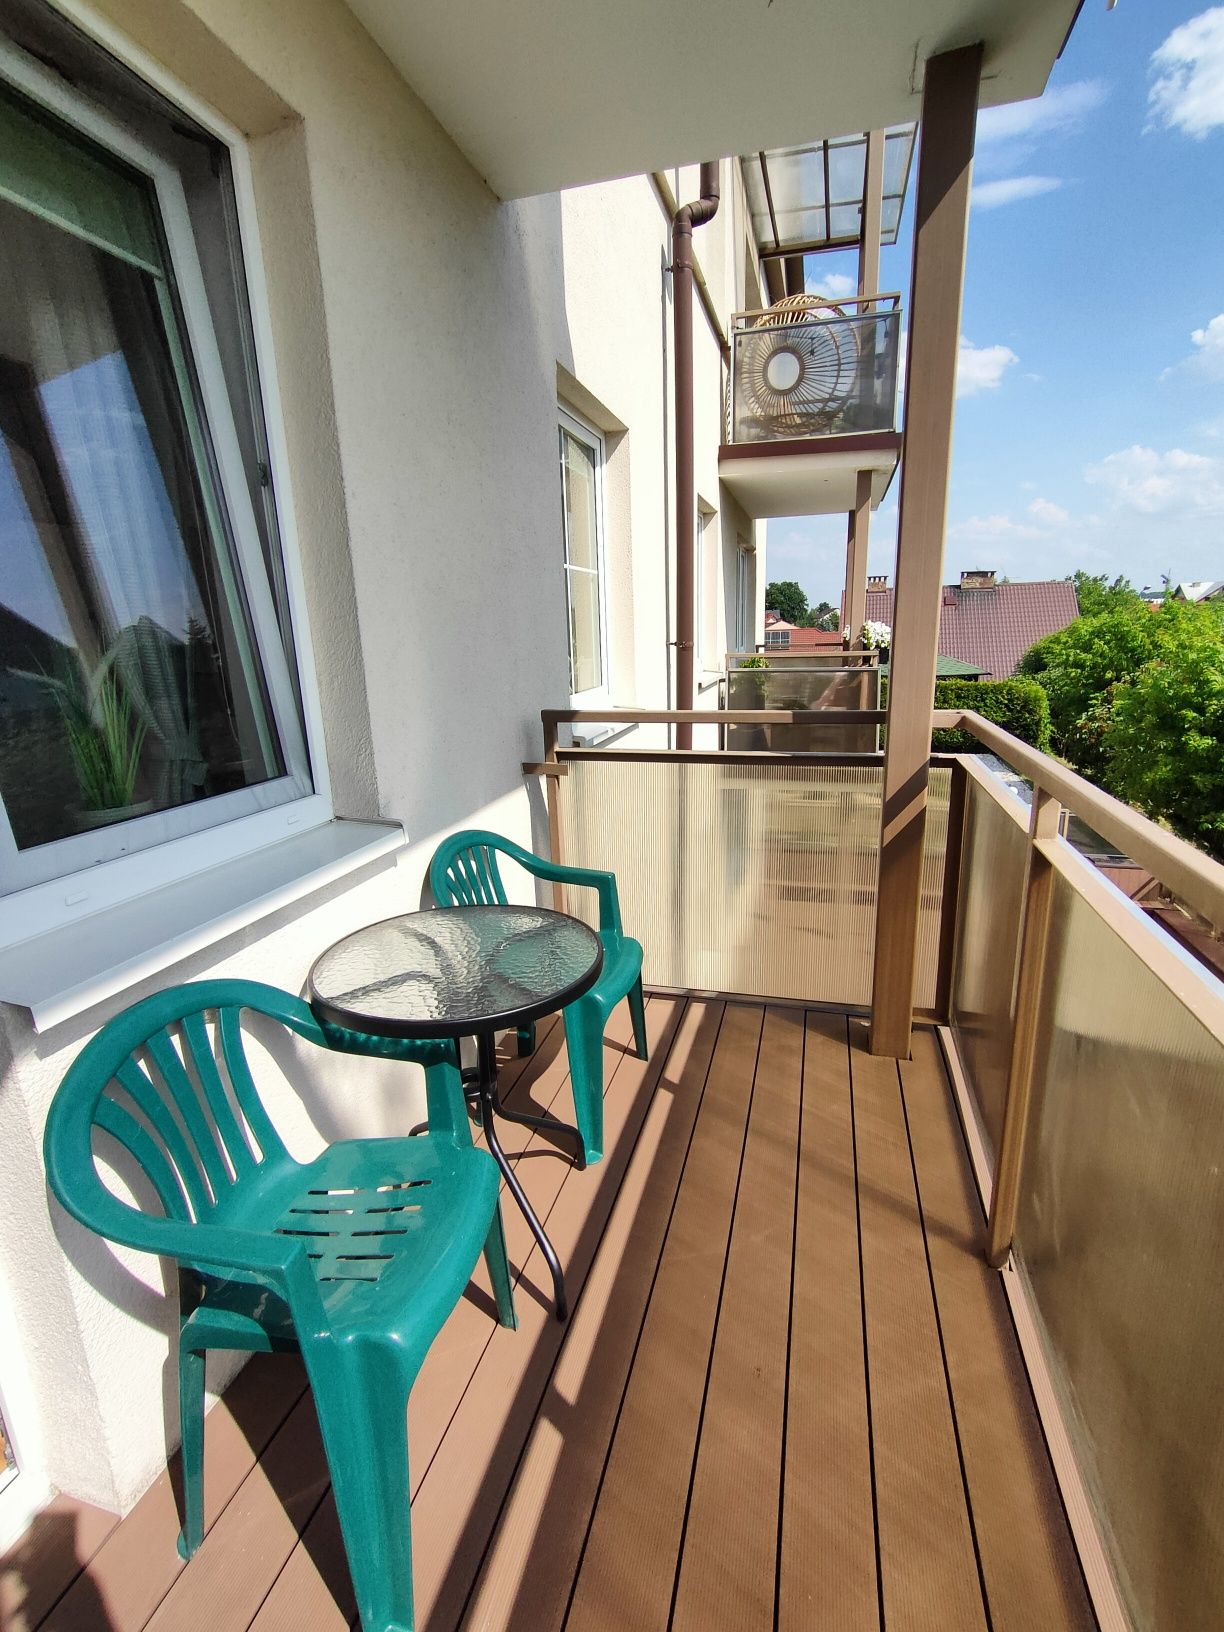 Noclegi w Ciechocinku apartament balkon PARKING blisko baseny centrum